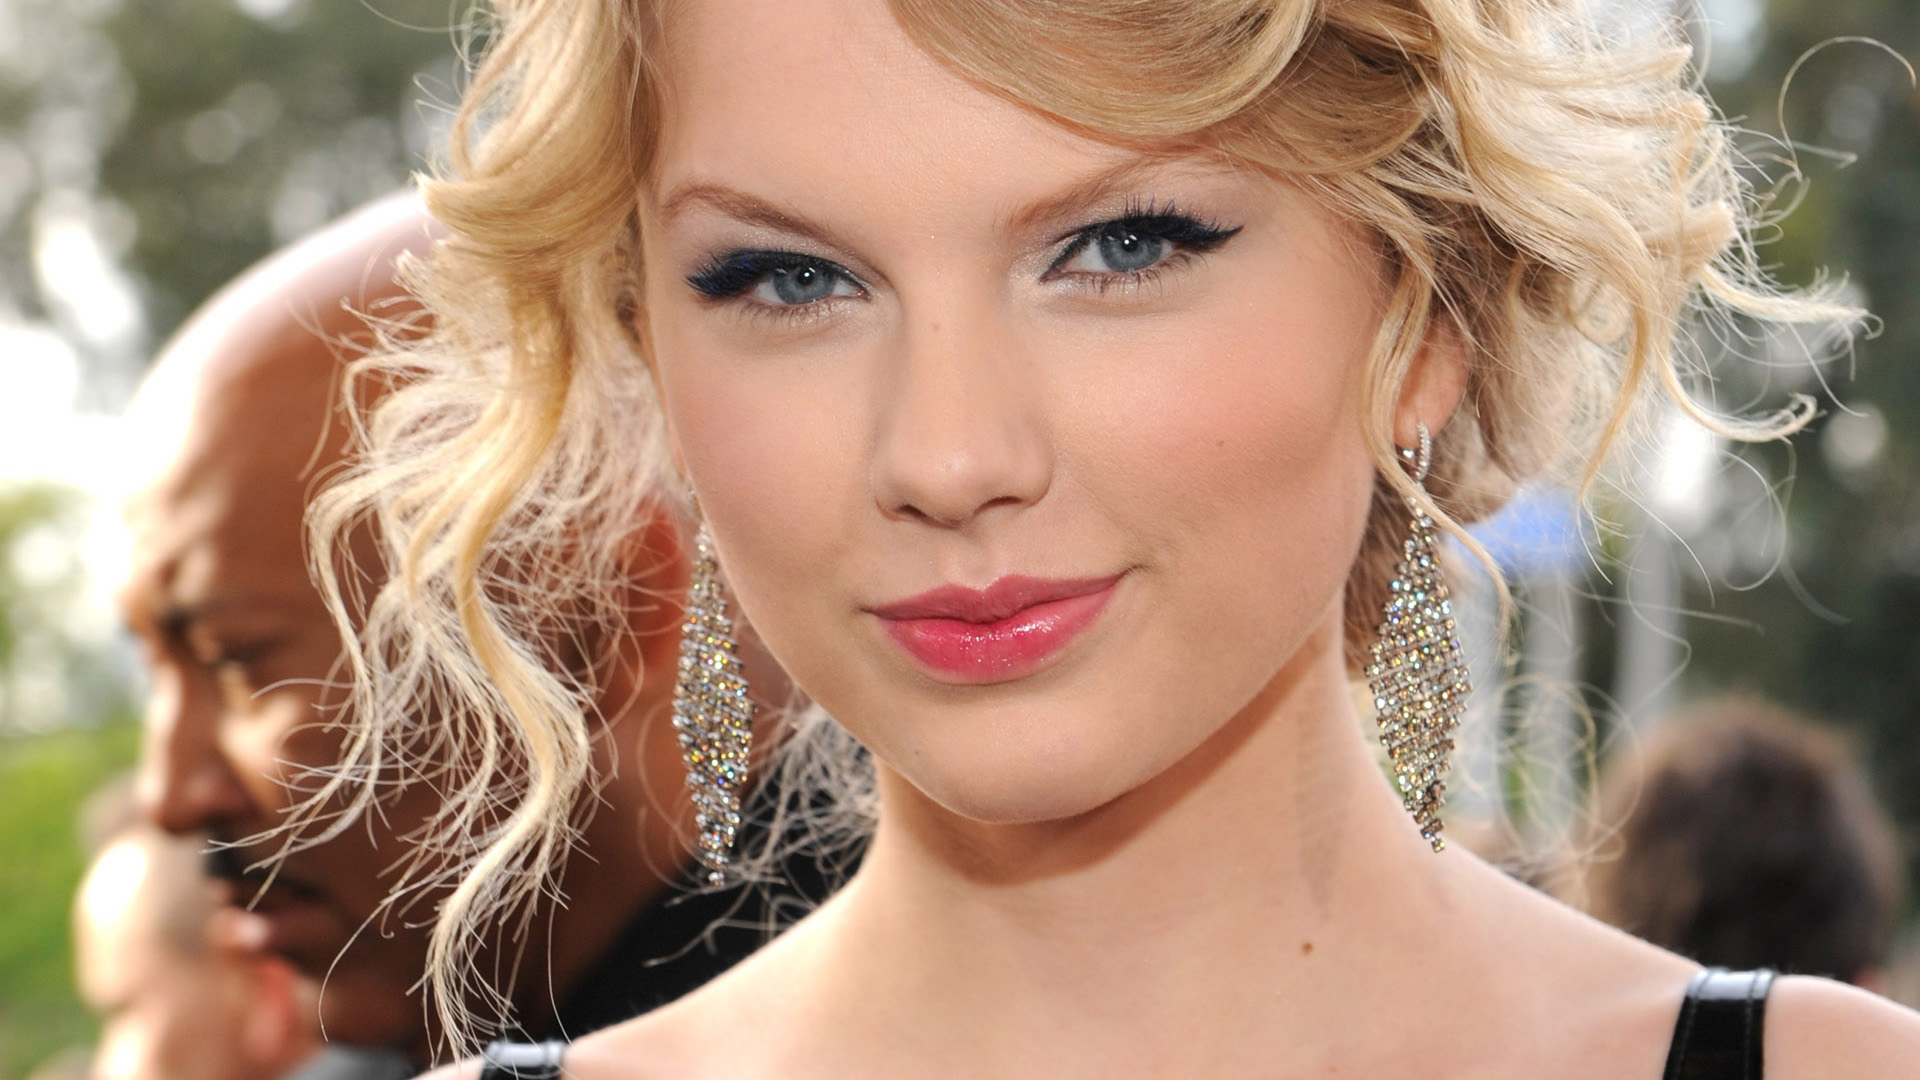 Descarga gratuita de fondo de pantalla para móvil de Música, Taylor Swift.